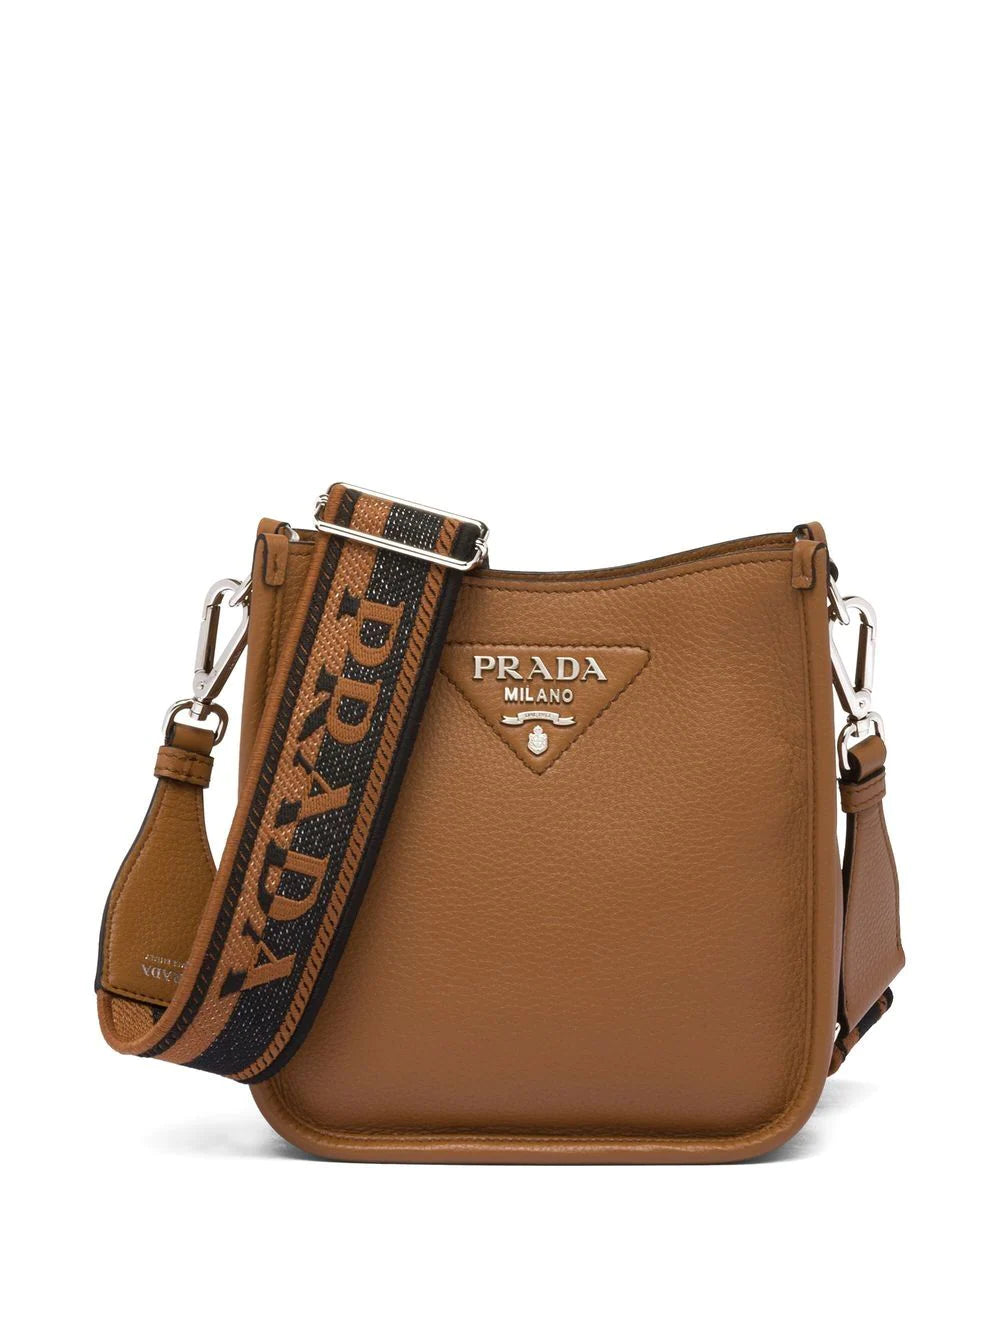 Prada Mini Saffiano Leather Crossbody Bag on SALE